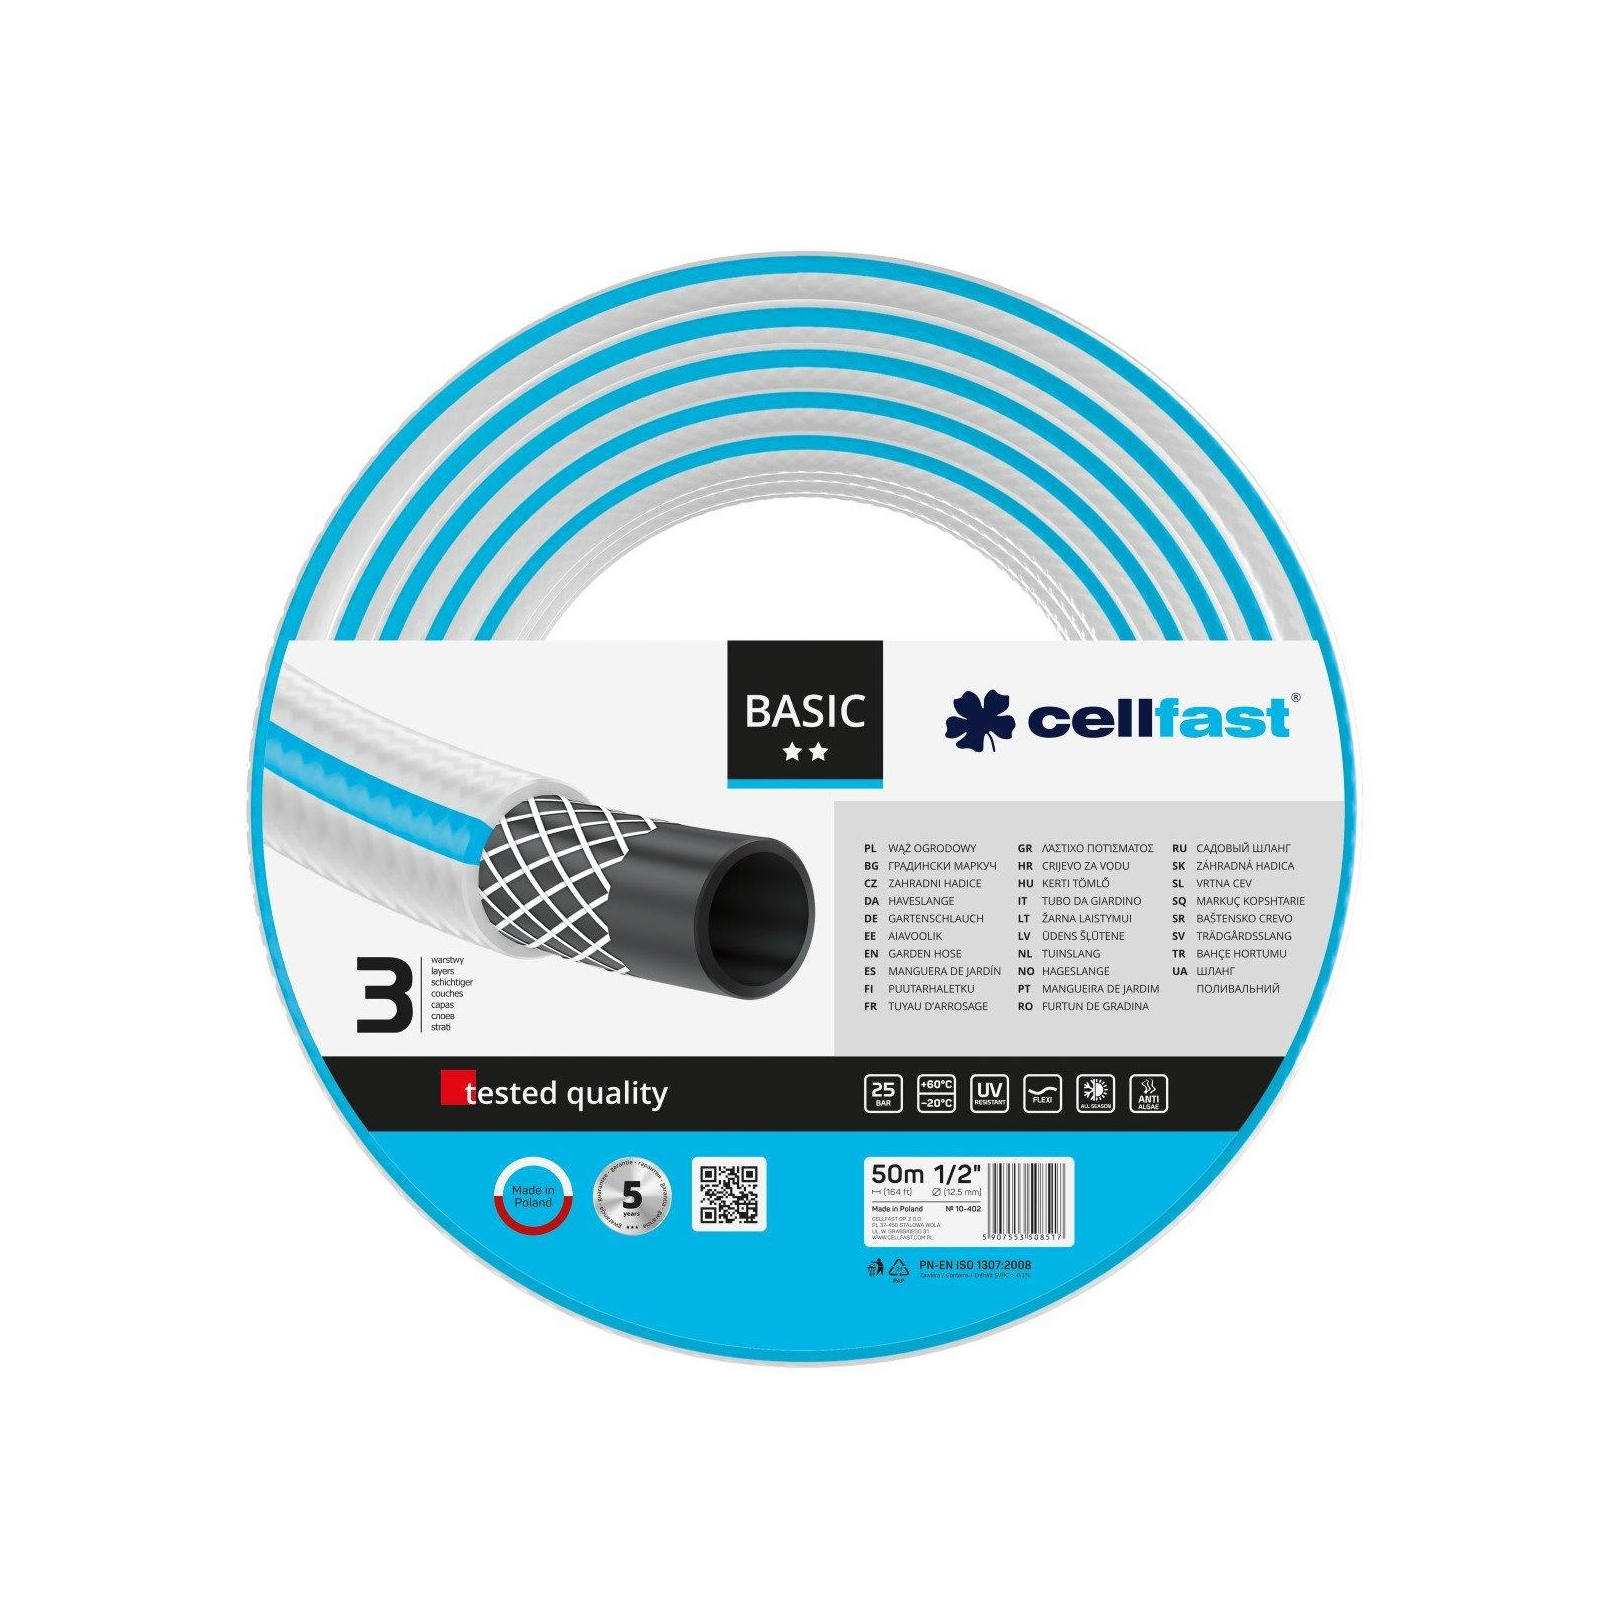 Поливочный шланг Cellfast BASIC, 1/2", 20м, 3 слоя, до 25 Бар, -20…+60°C (10-400)